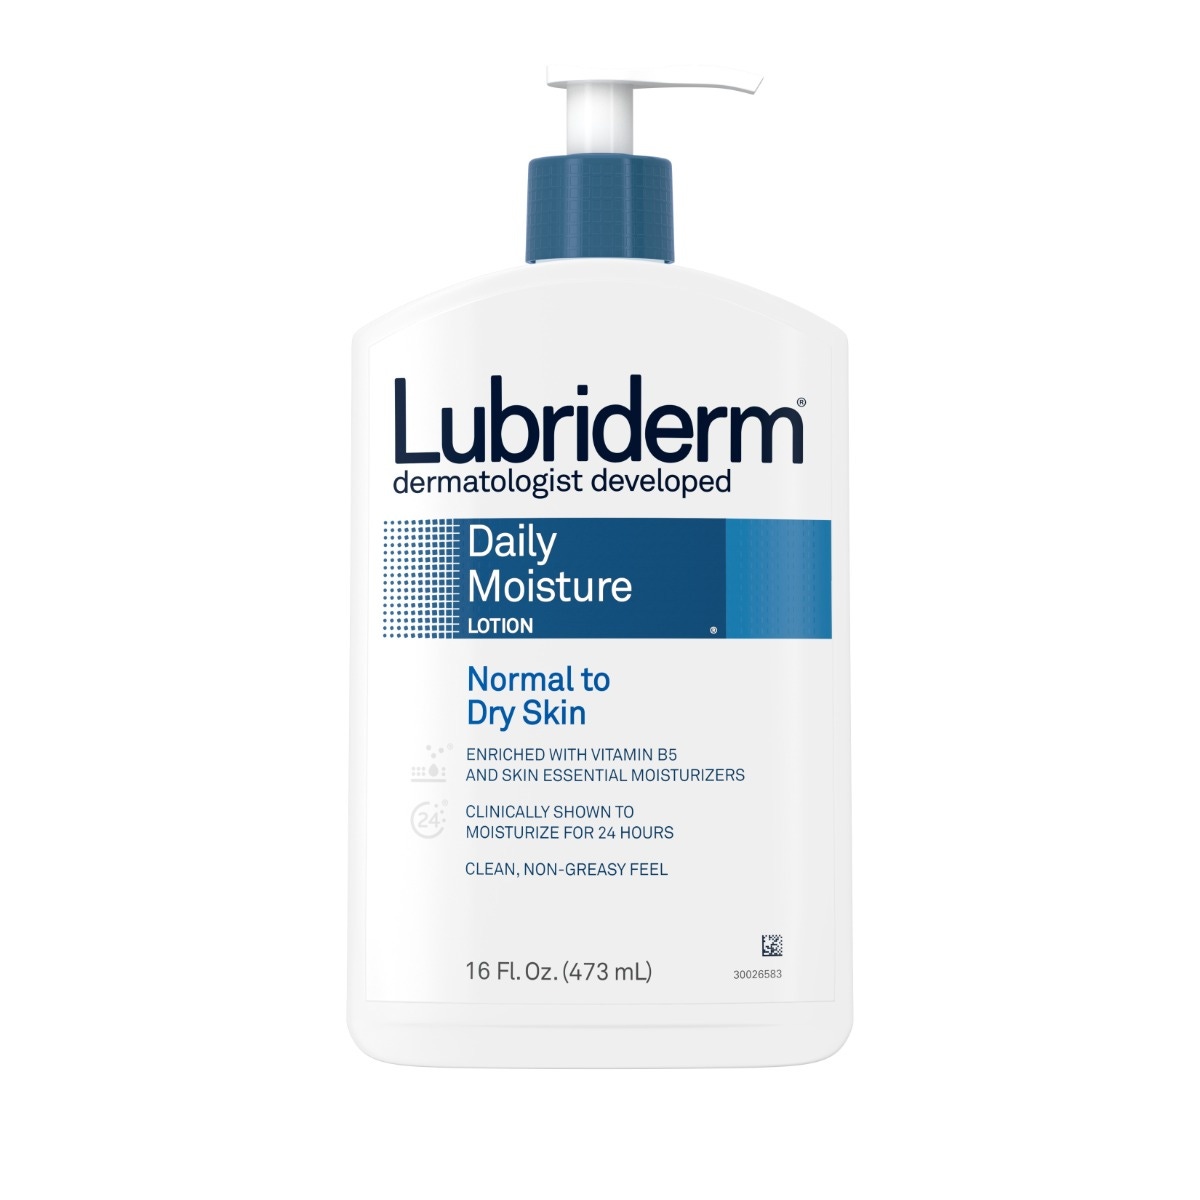 Lubriderm Dry Skin Lotions